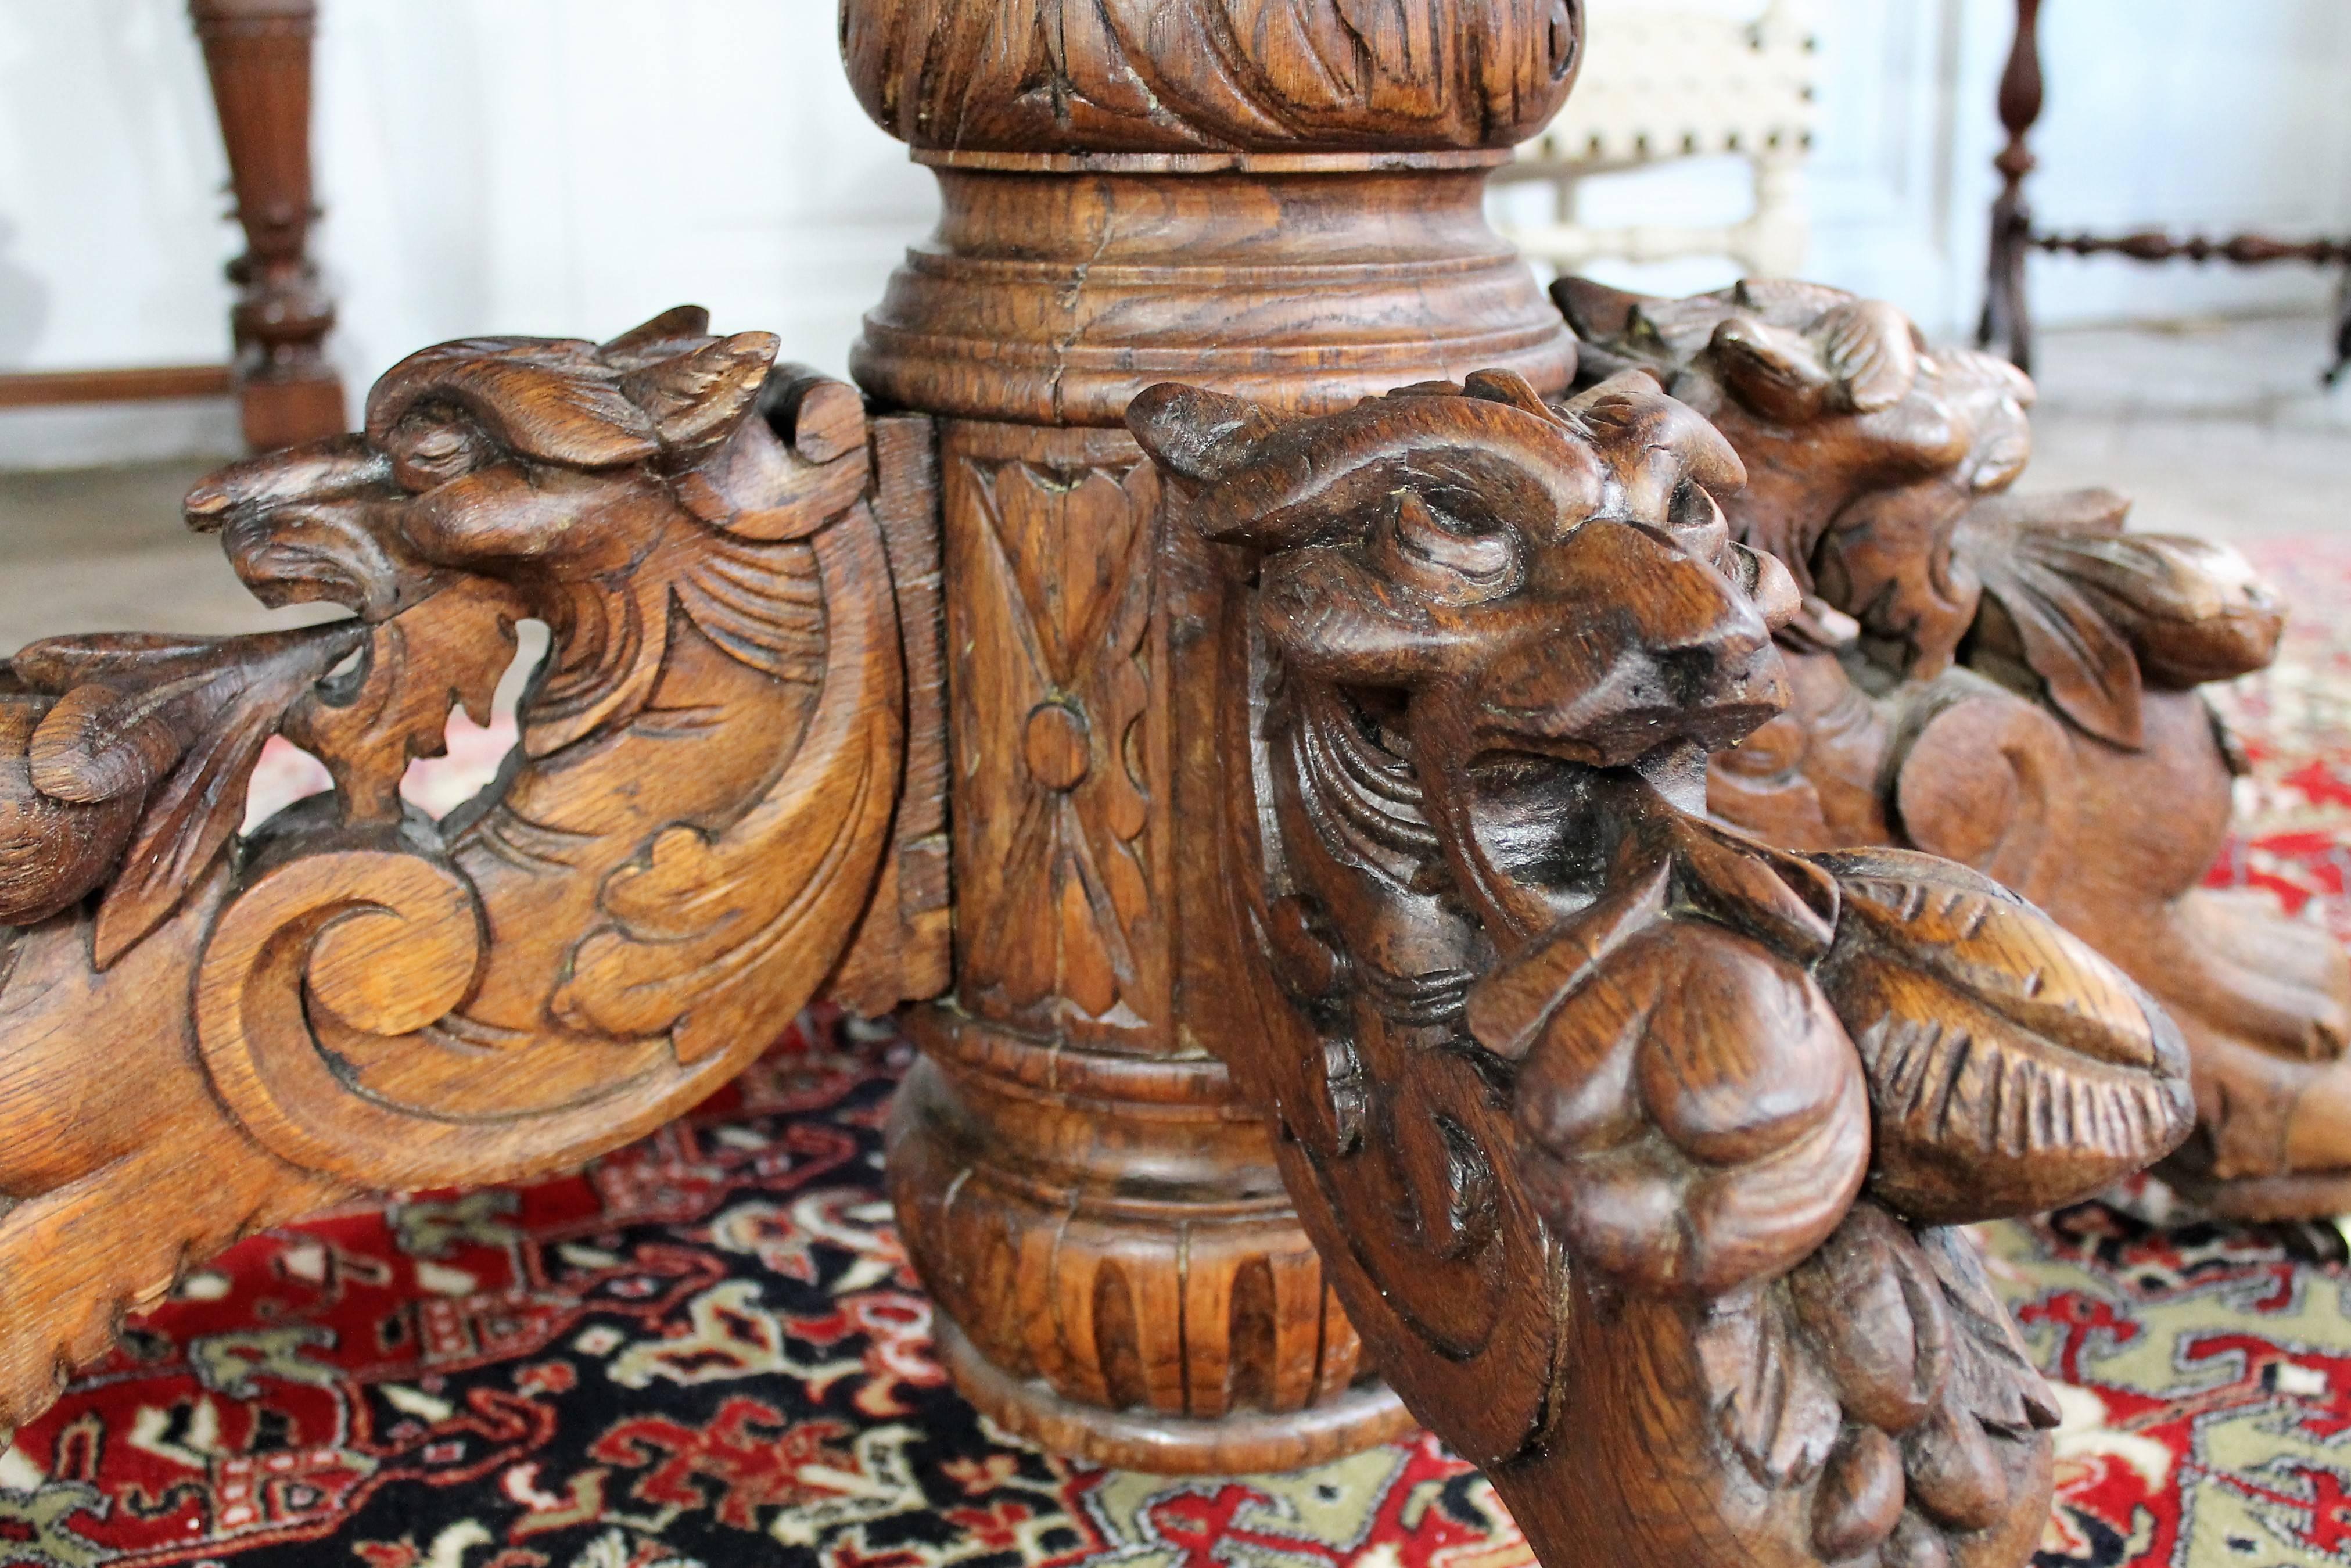 19th Century Renaissance Revival Table with Lion's Head